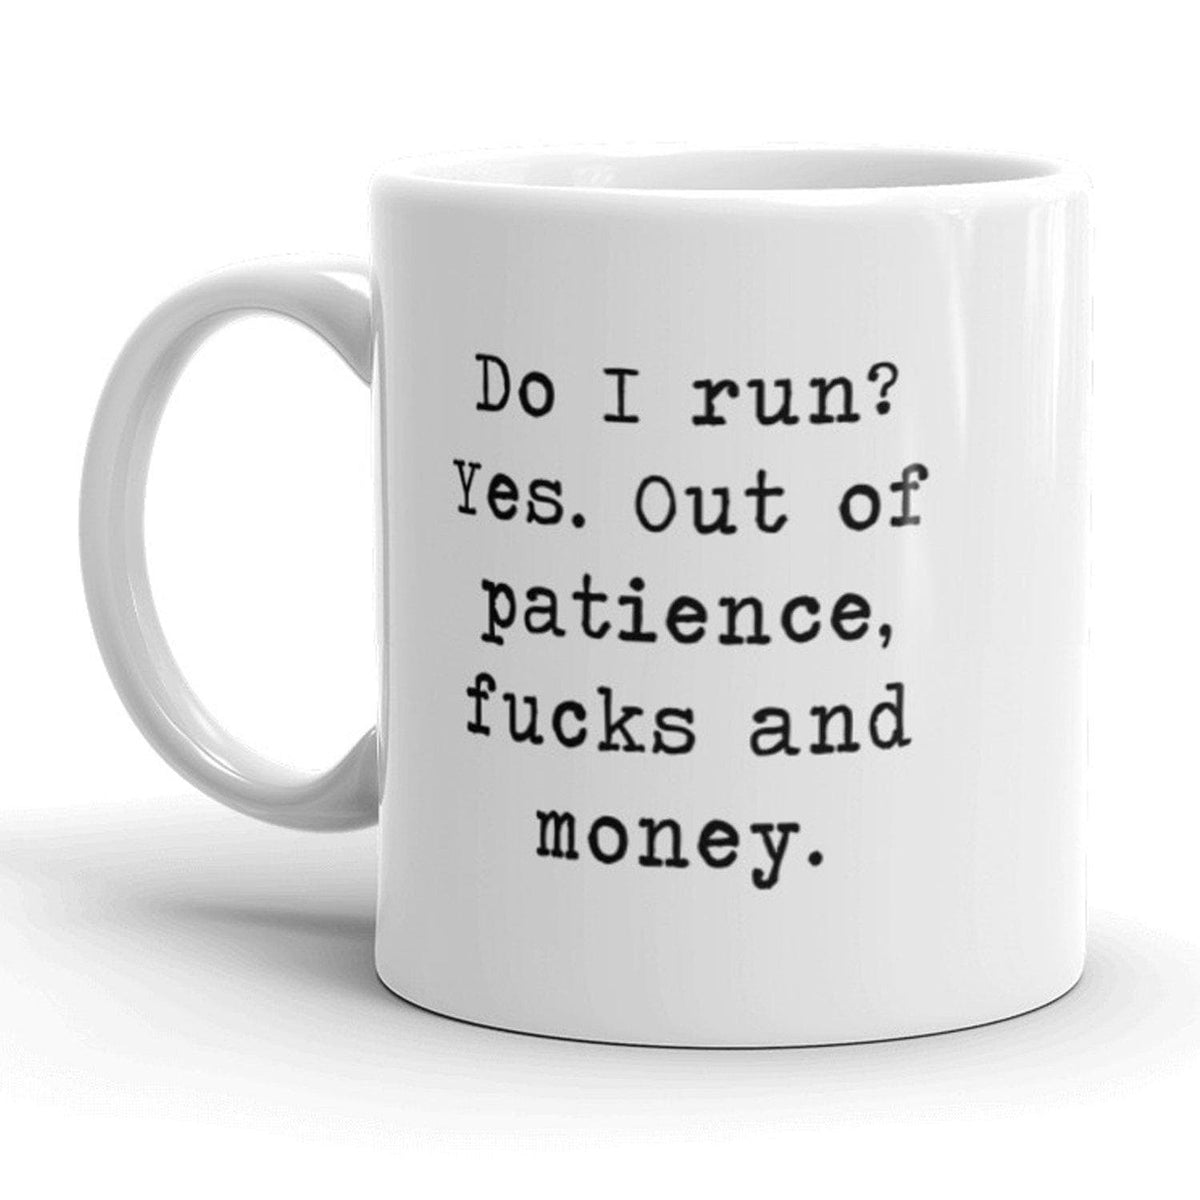 I Run Out Of Patience Fucks And Money Mug - Crazy Dog T-Shirts